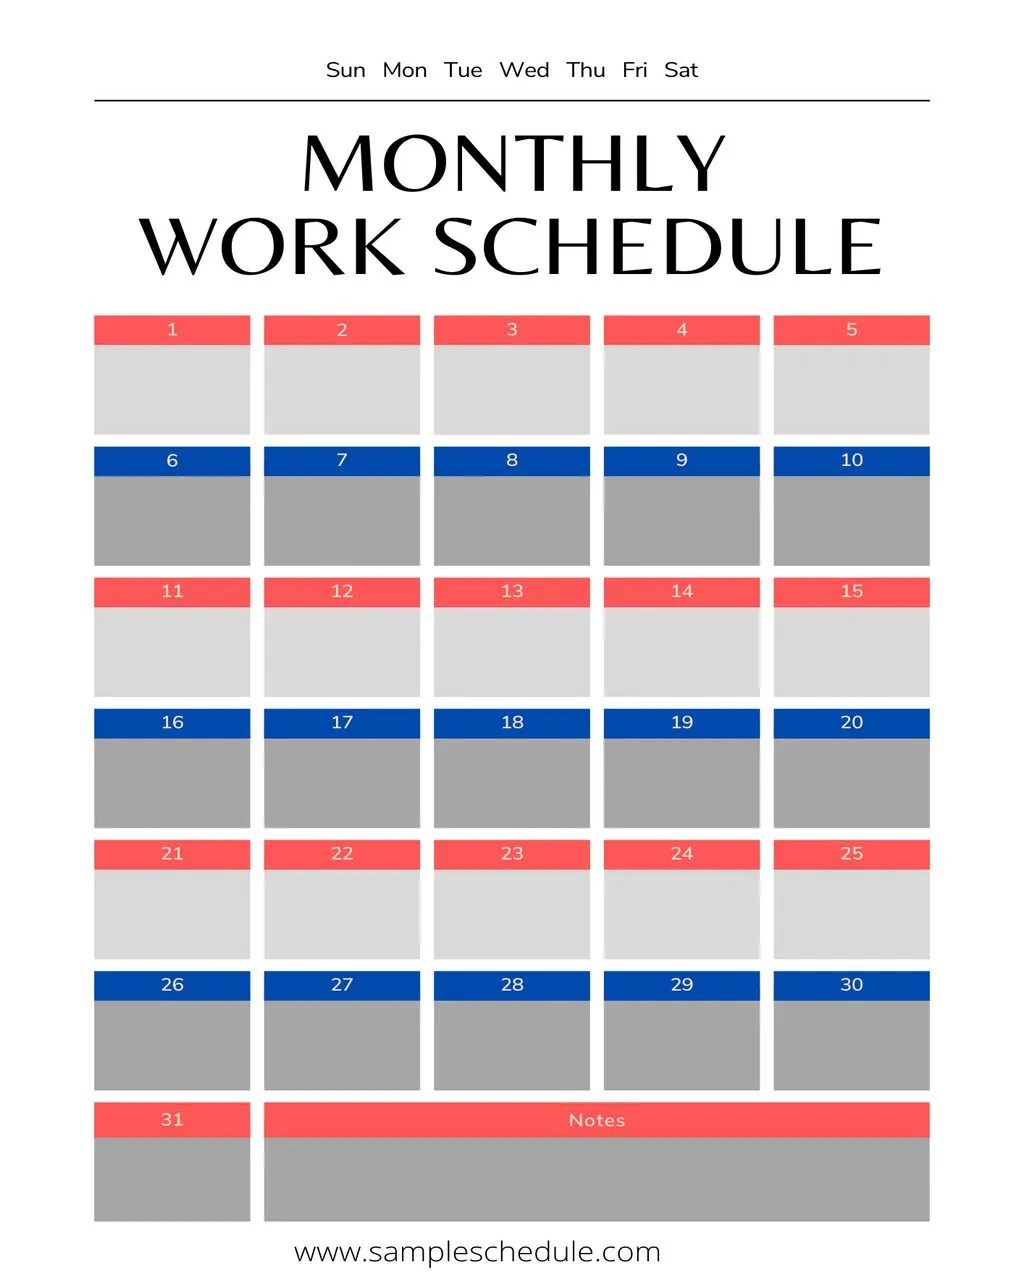 Monthly Work Schedule Template 15